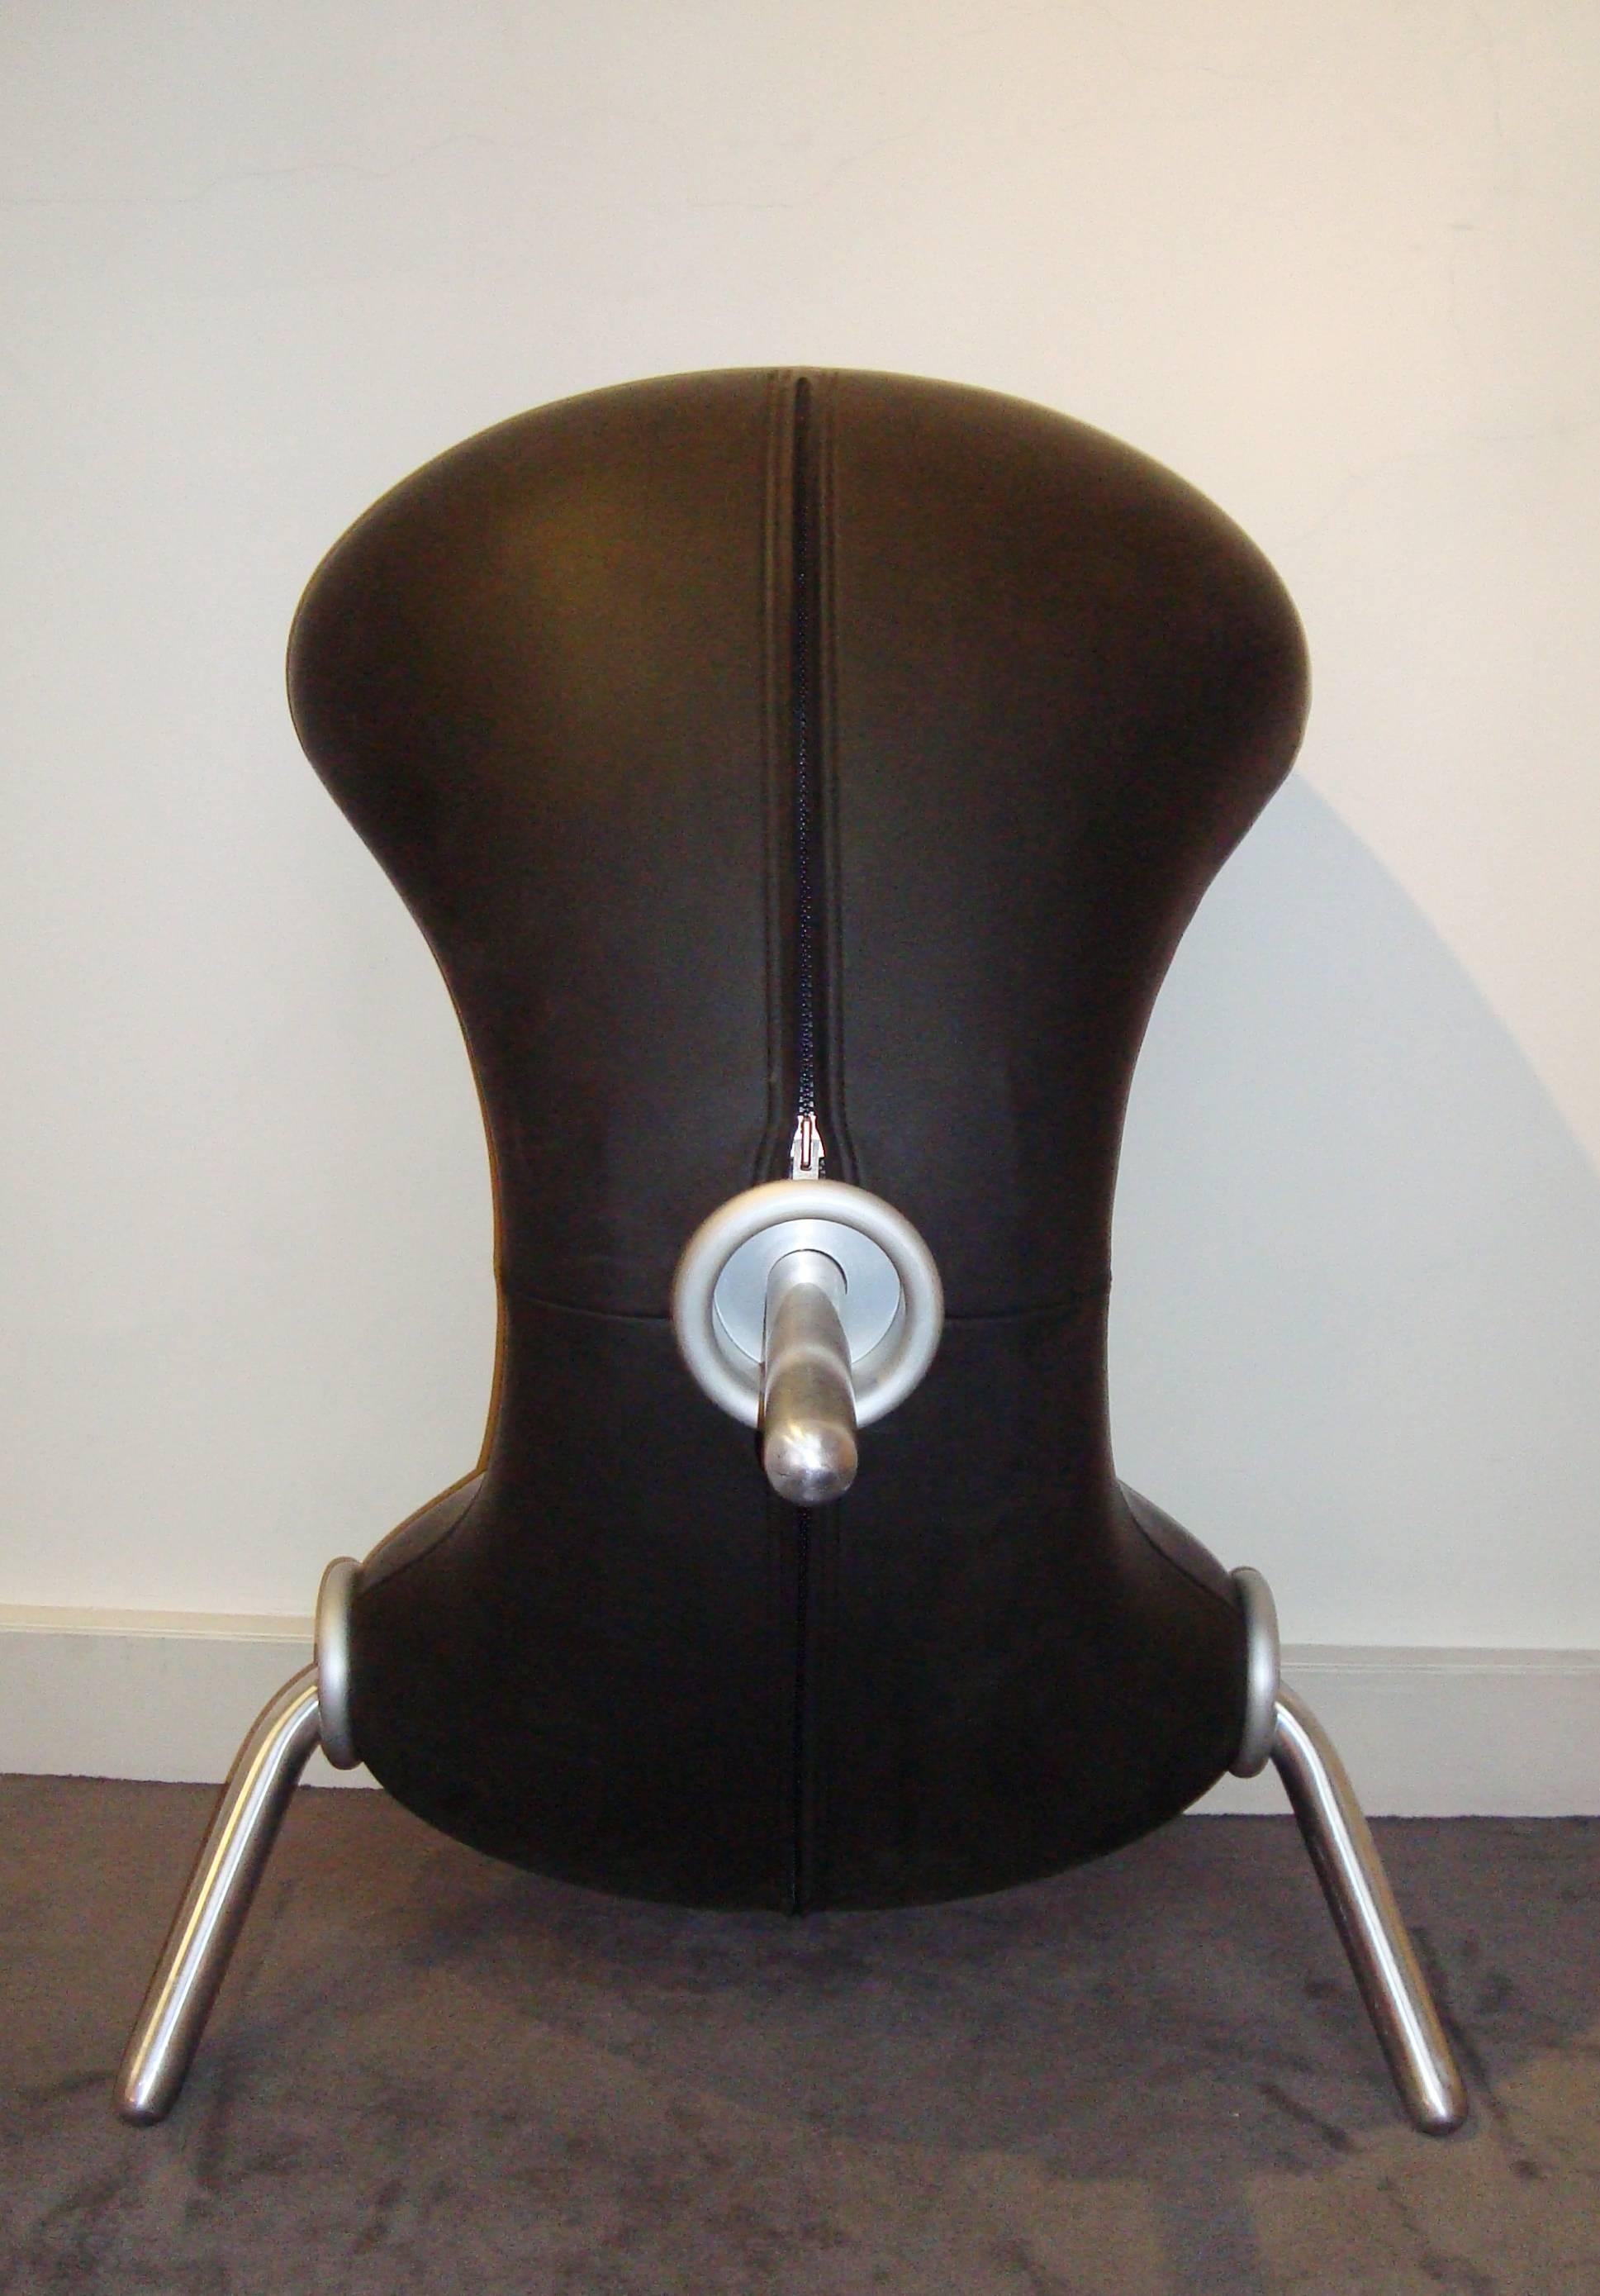 Australian Black Neoprene Embryo Chair by Marc Newson, 1988